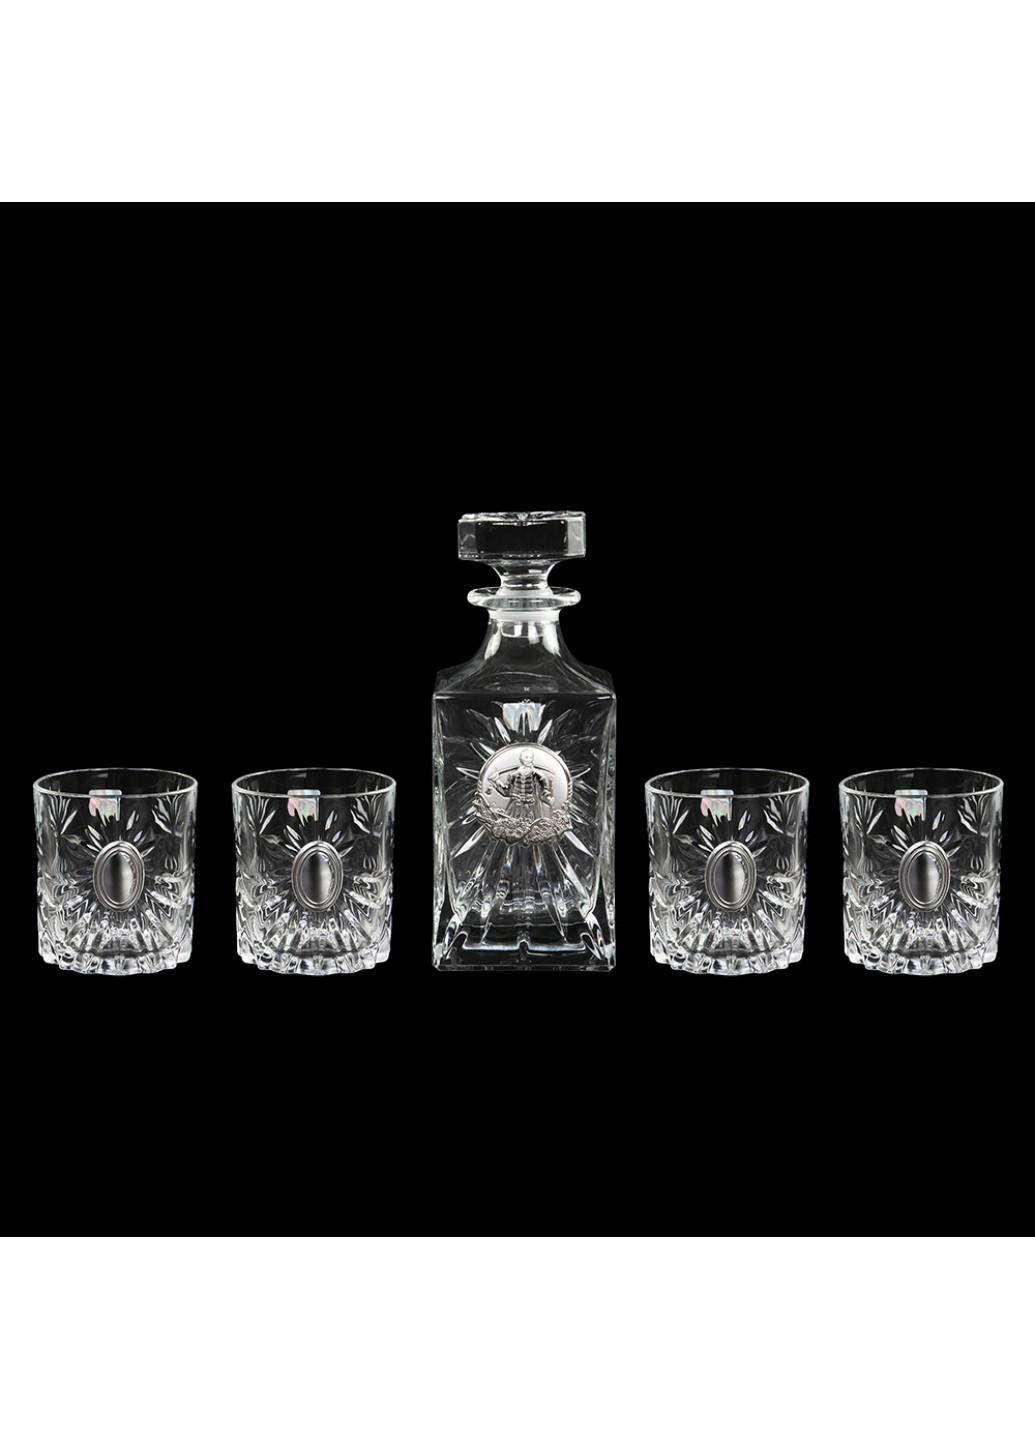 Сет кришталевих стаканів "Козак з шаблею Оазіс" графін і 4 стакана, накладки срібло Boss Crystal (252344600)